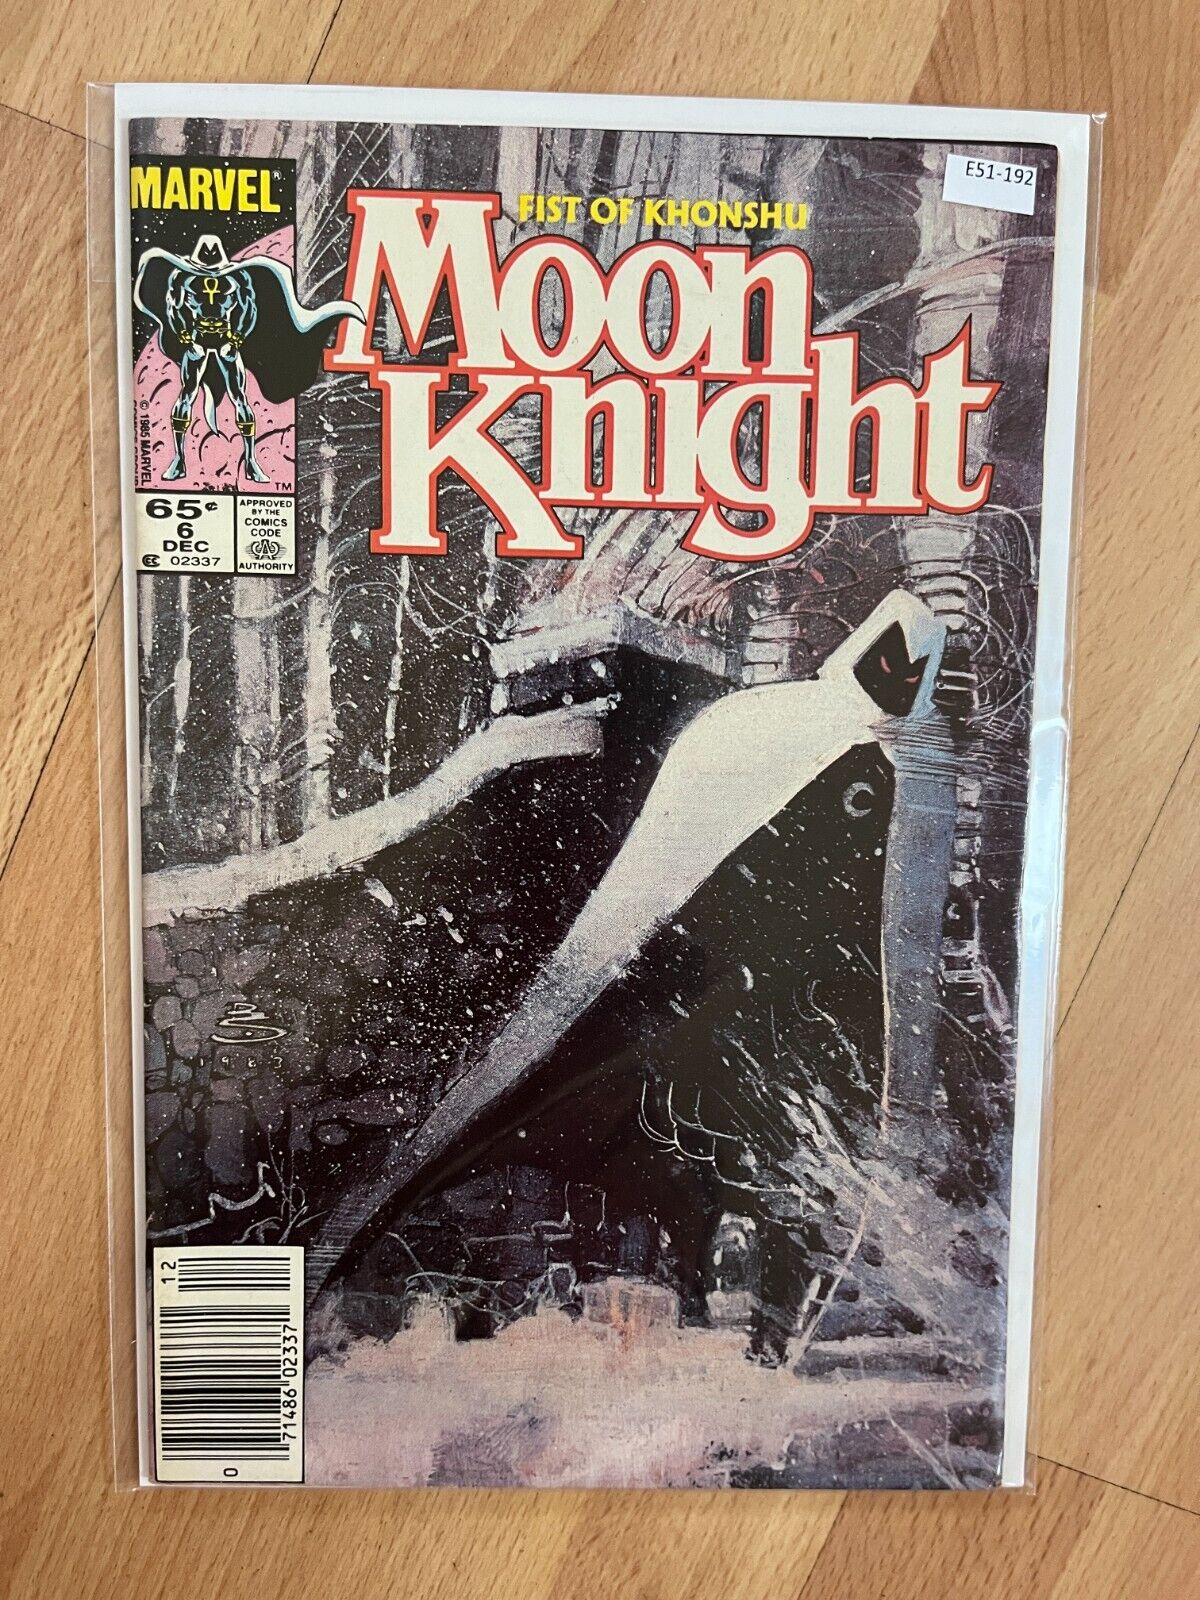 Moon Knight 6 Marvel Comics 6.0 Newsstand E51-192